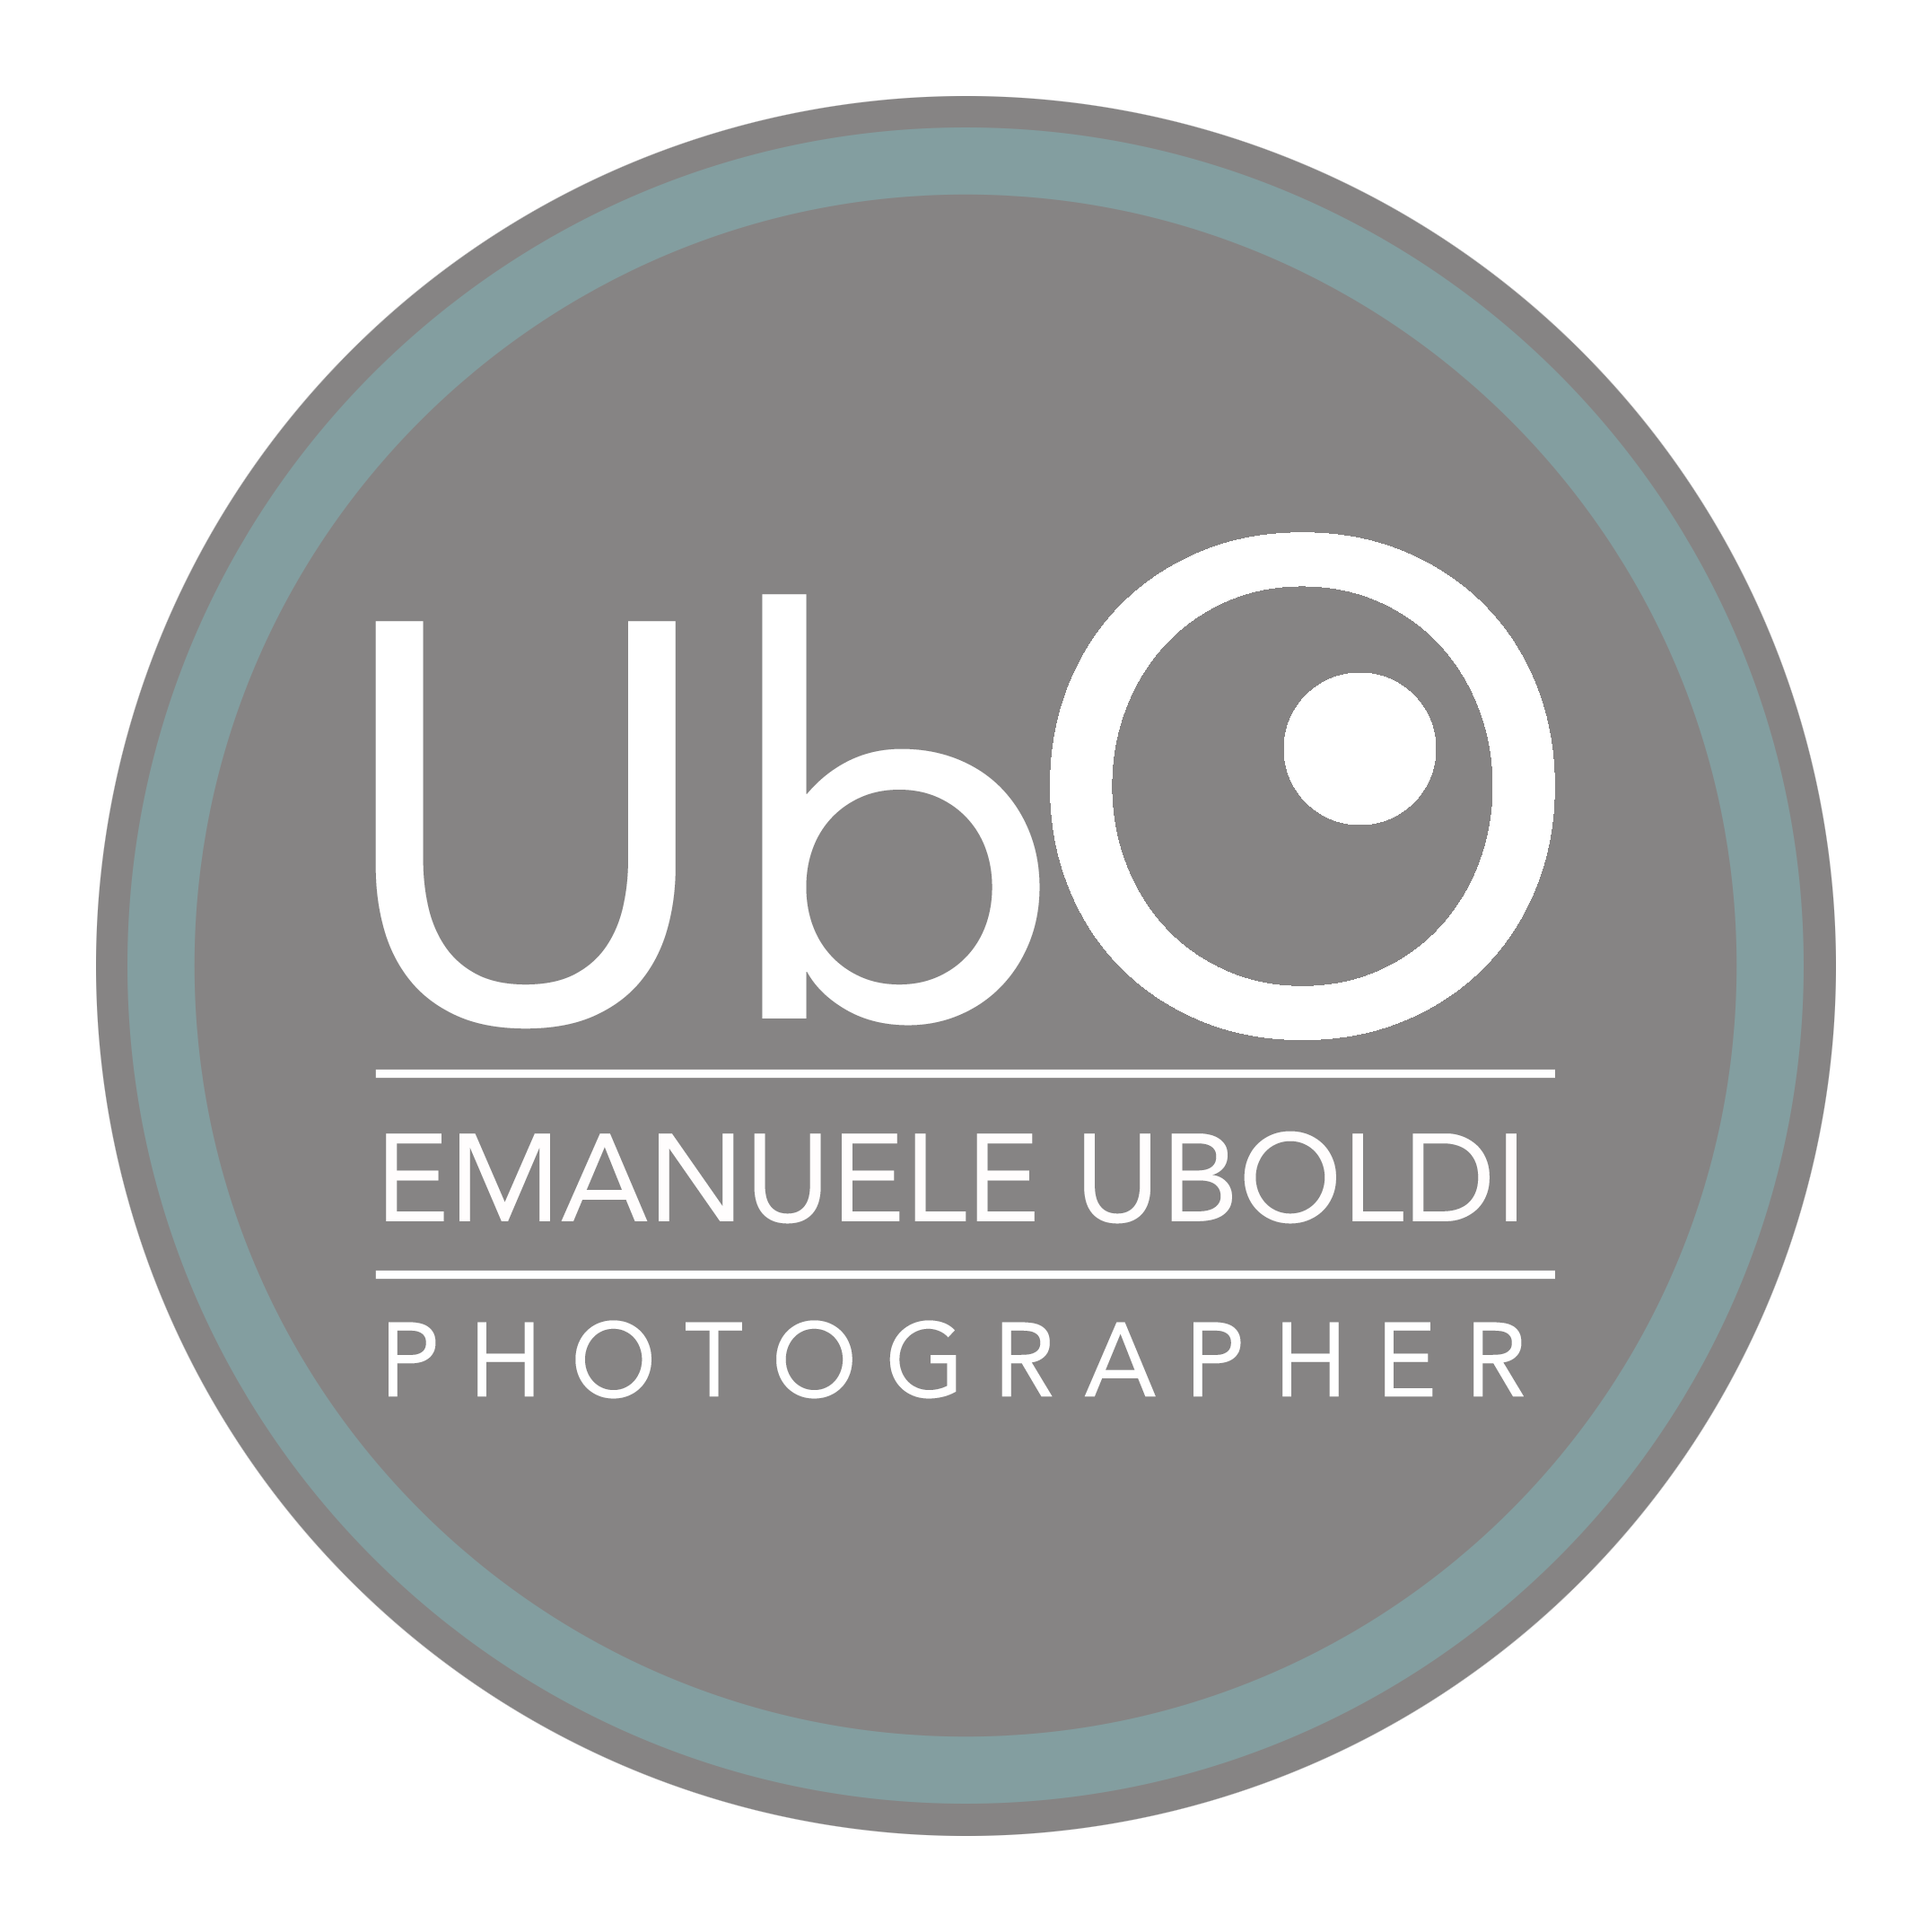 Contattami - Emanuele Uboldi Studio Ubo Photographer